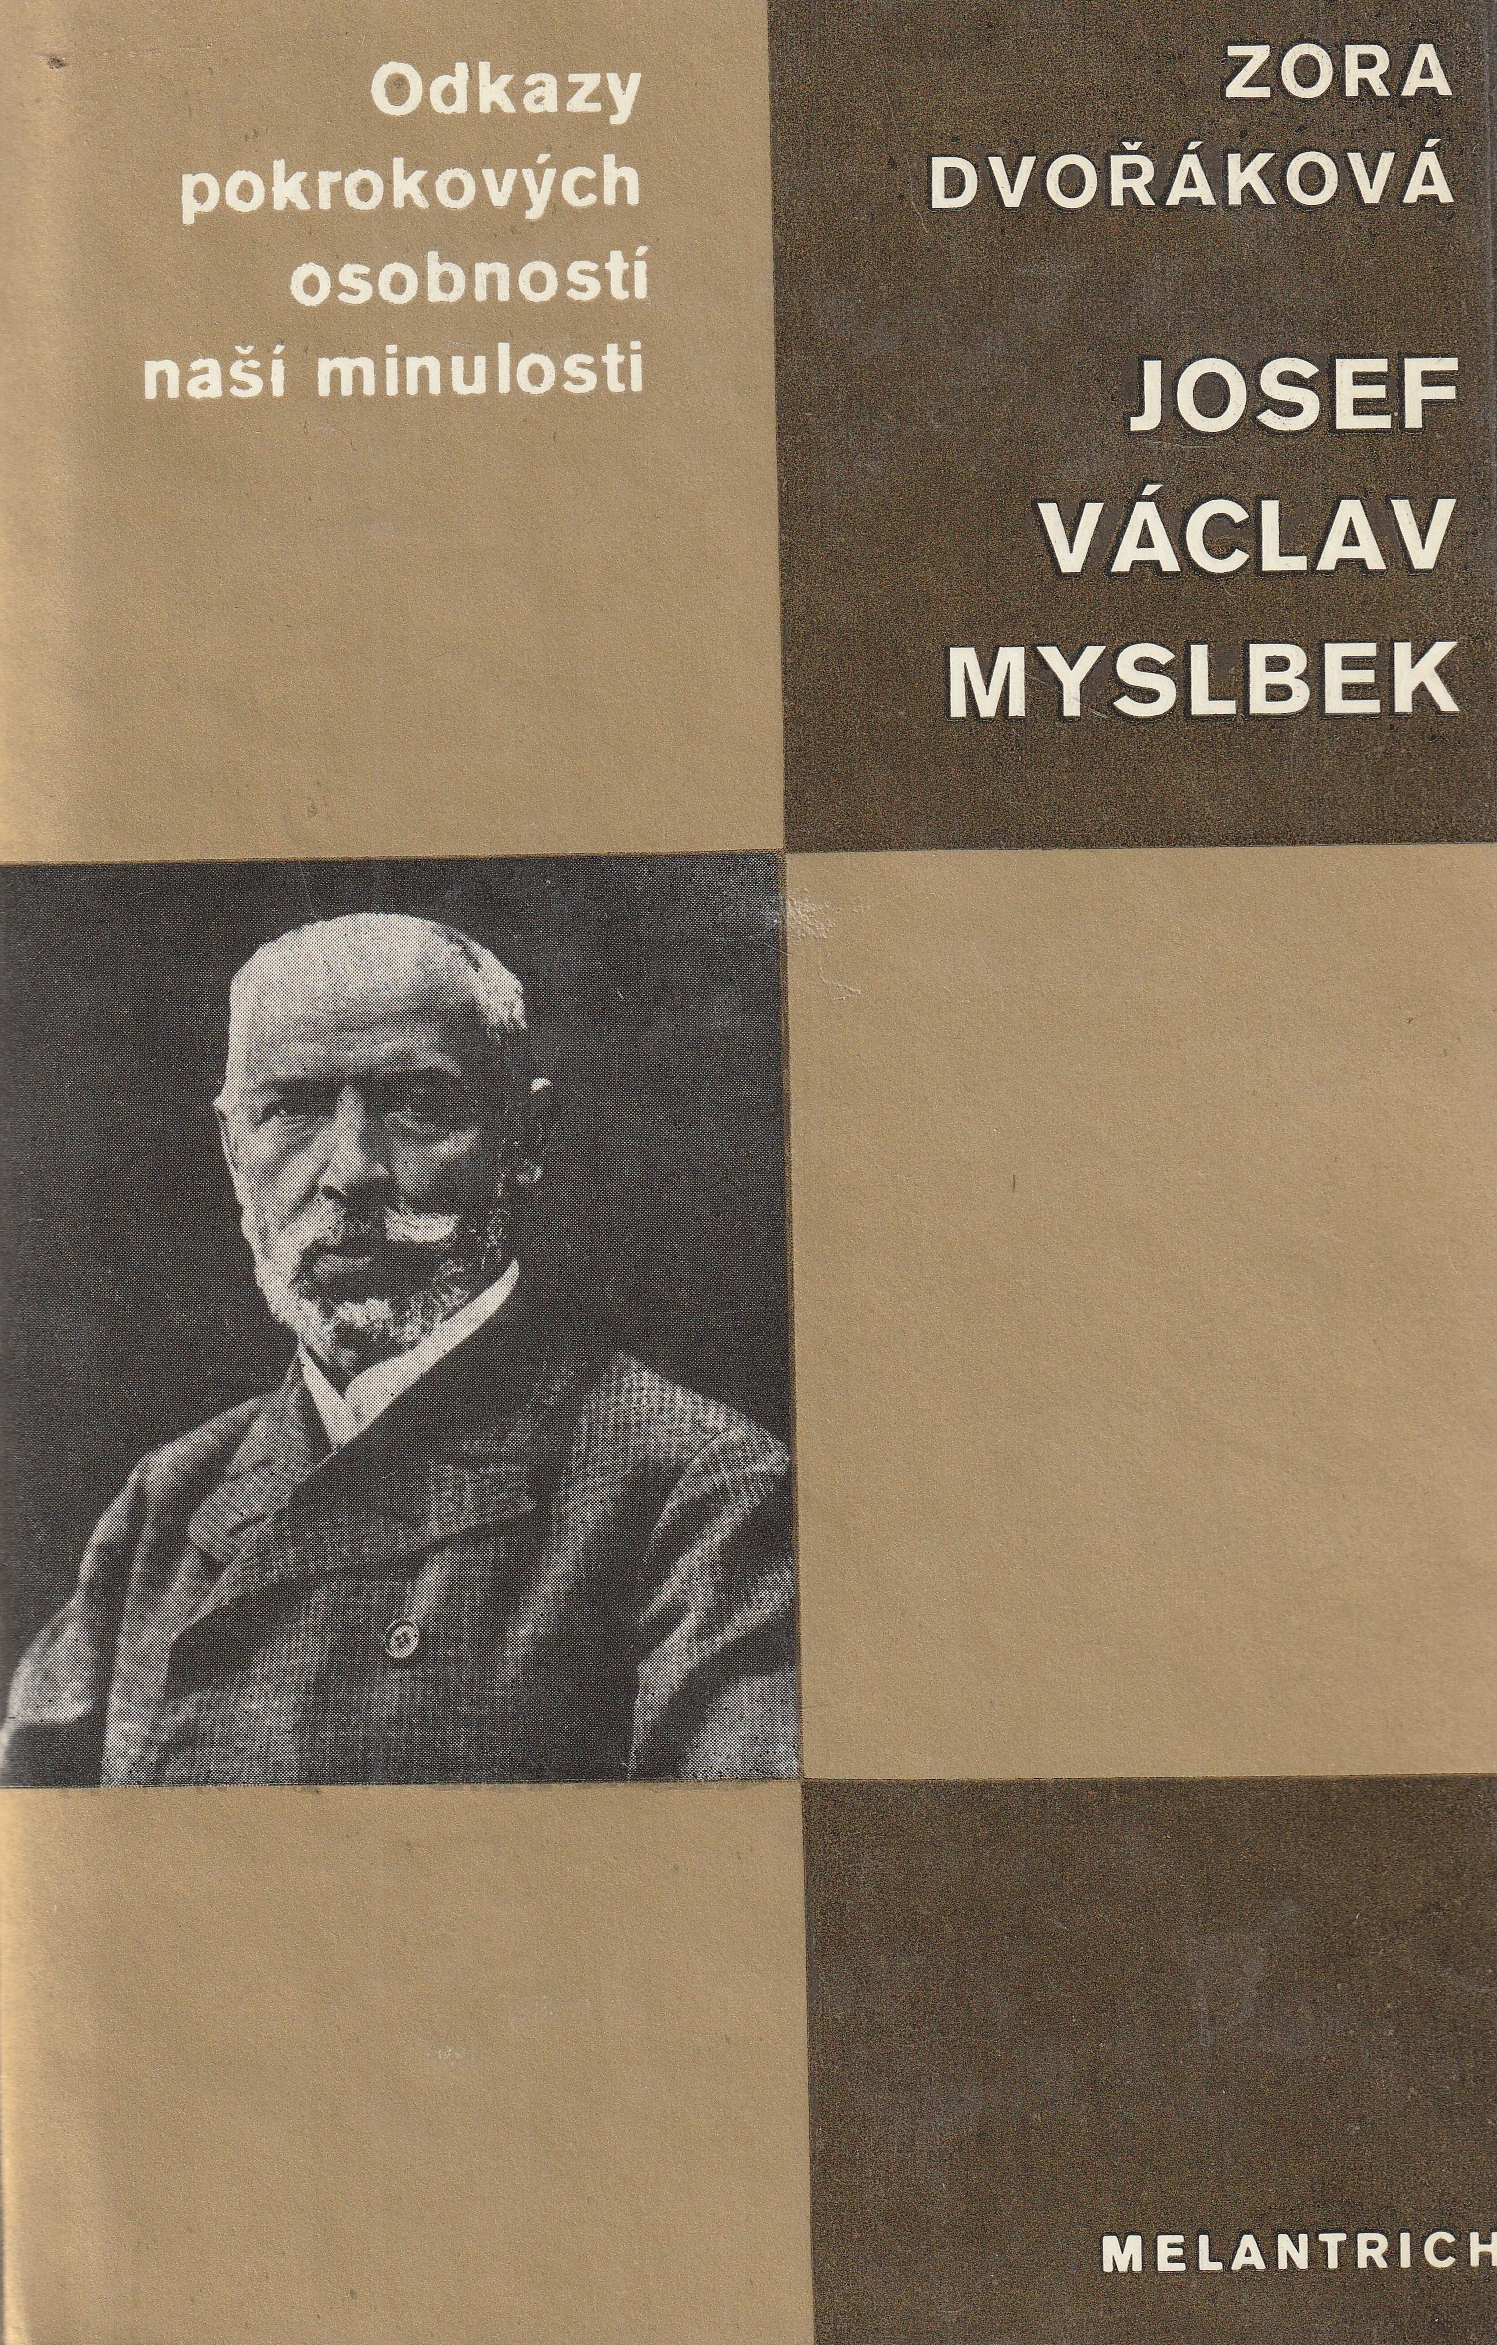 Josef Václav Myslbek